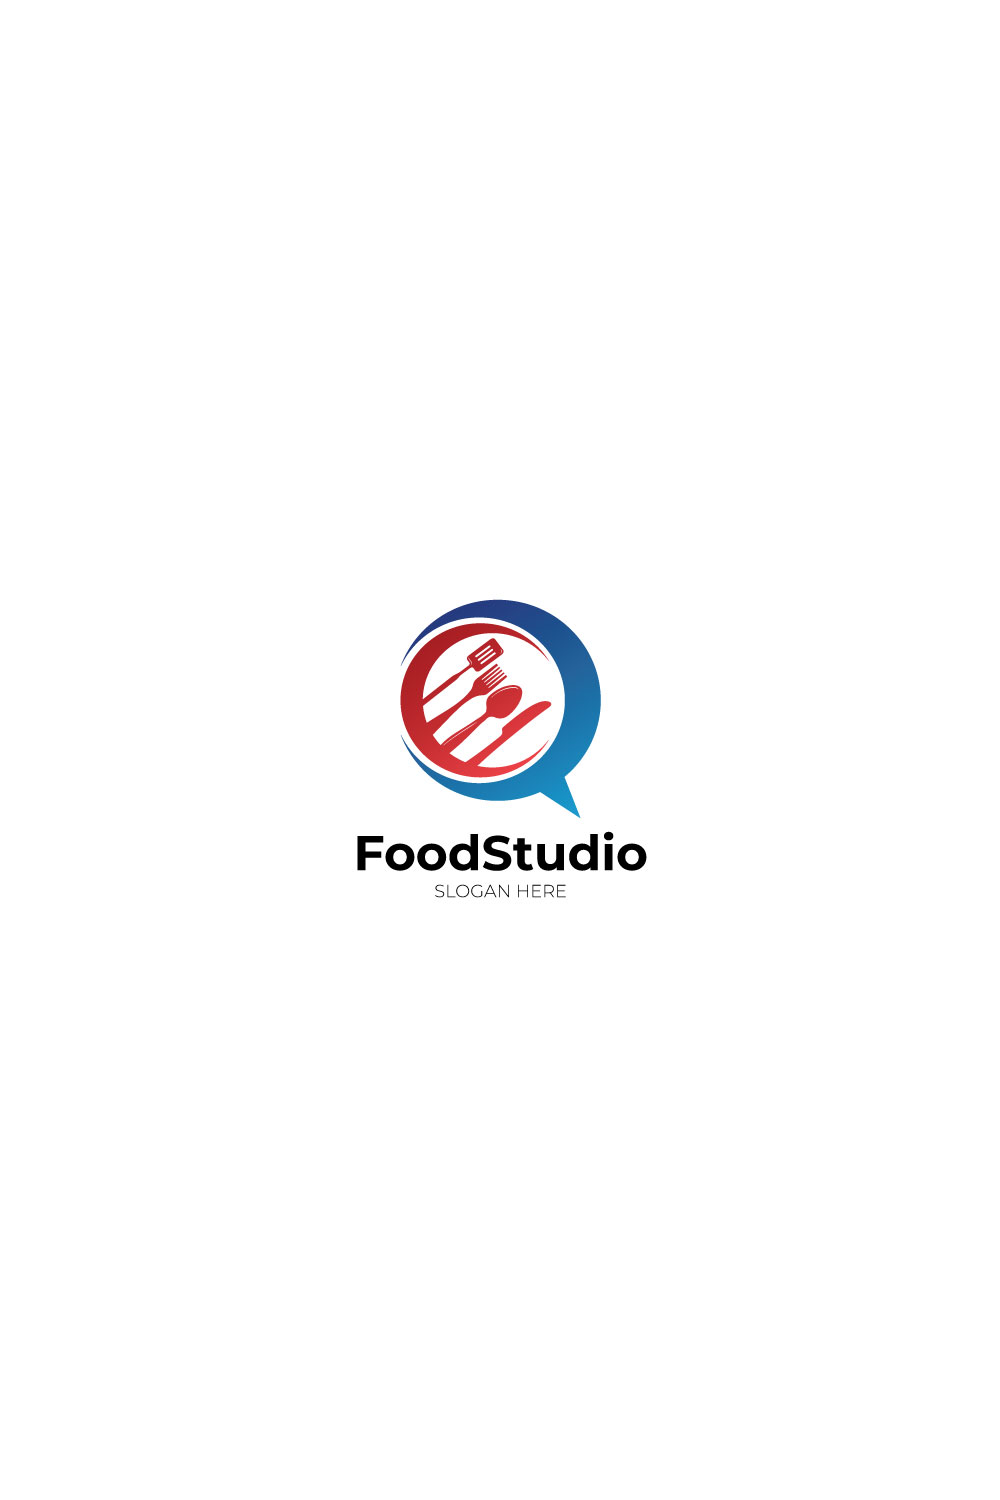 Food studio vector logo Cooking logo Restaurant vector logo design pinterest preview image.